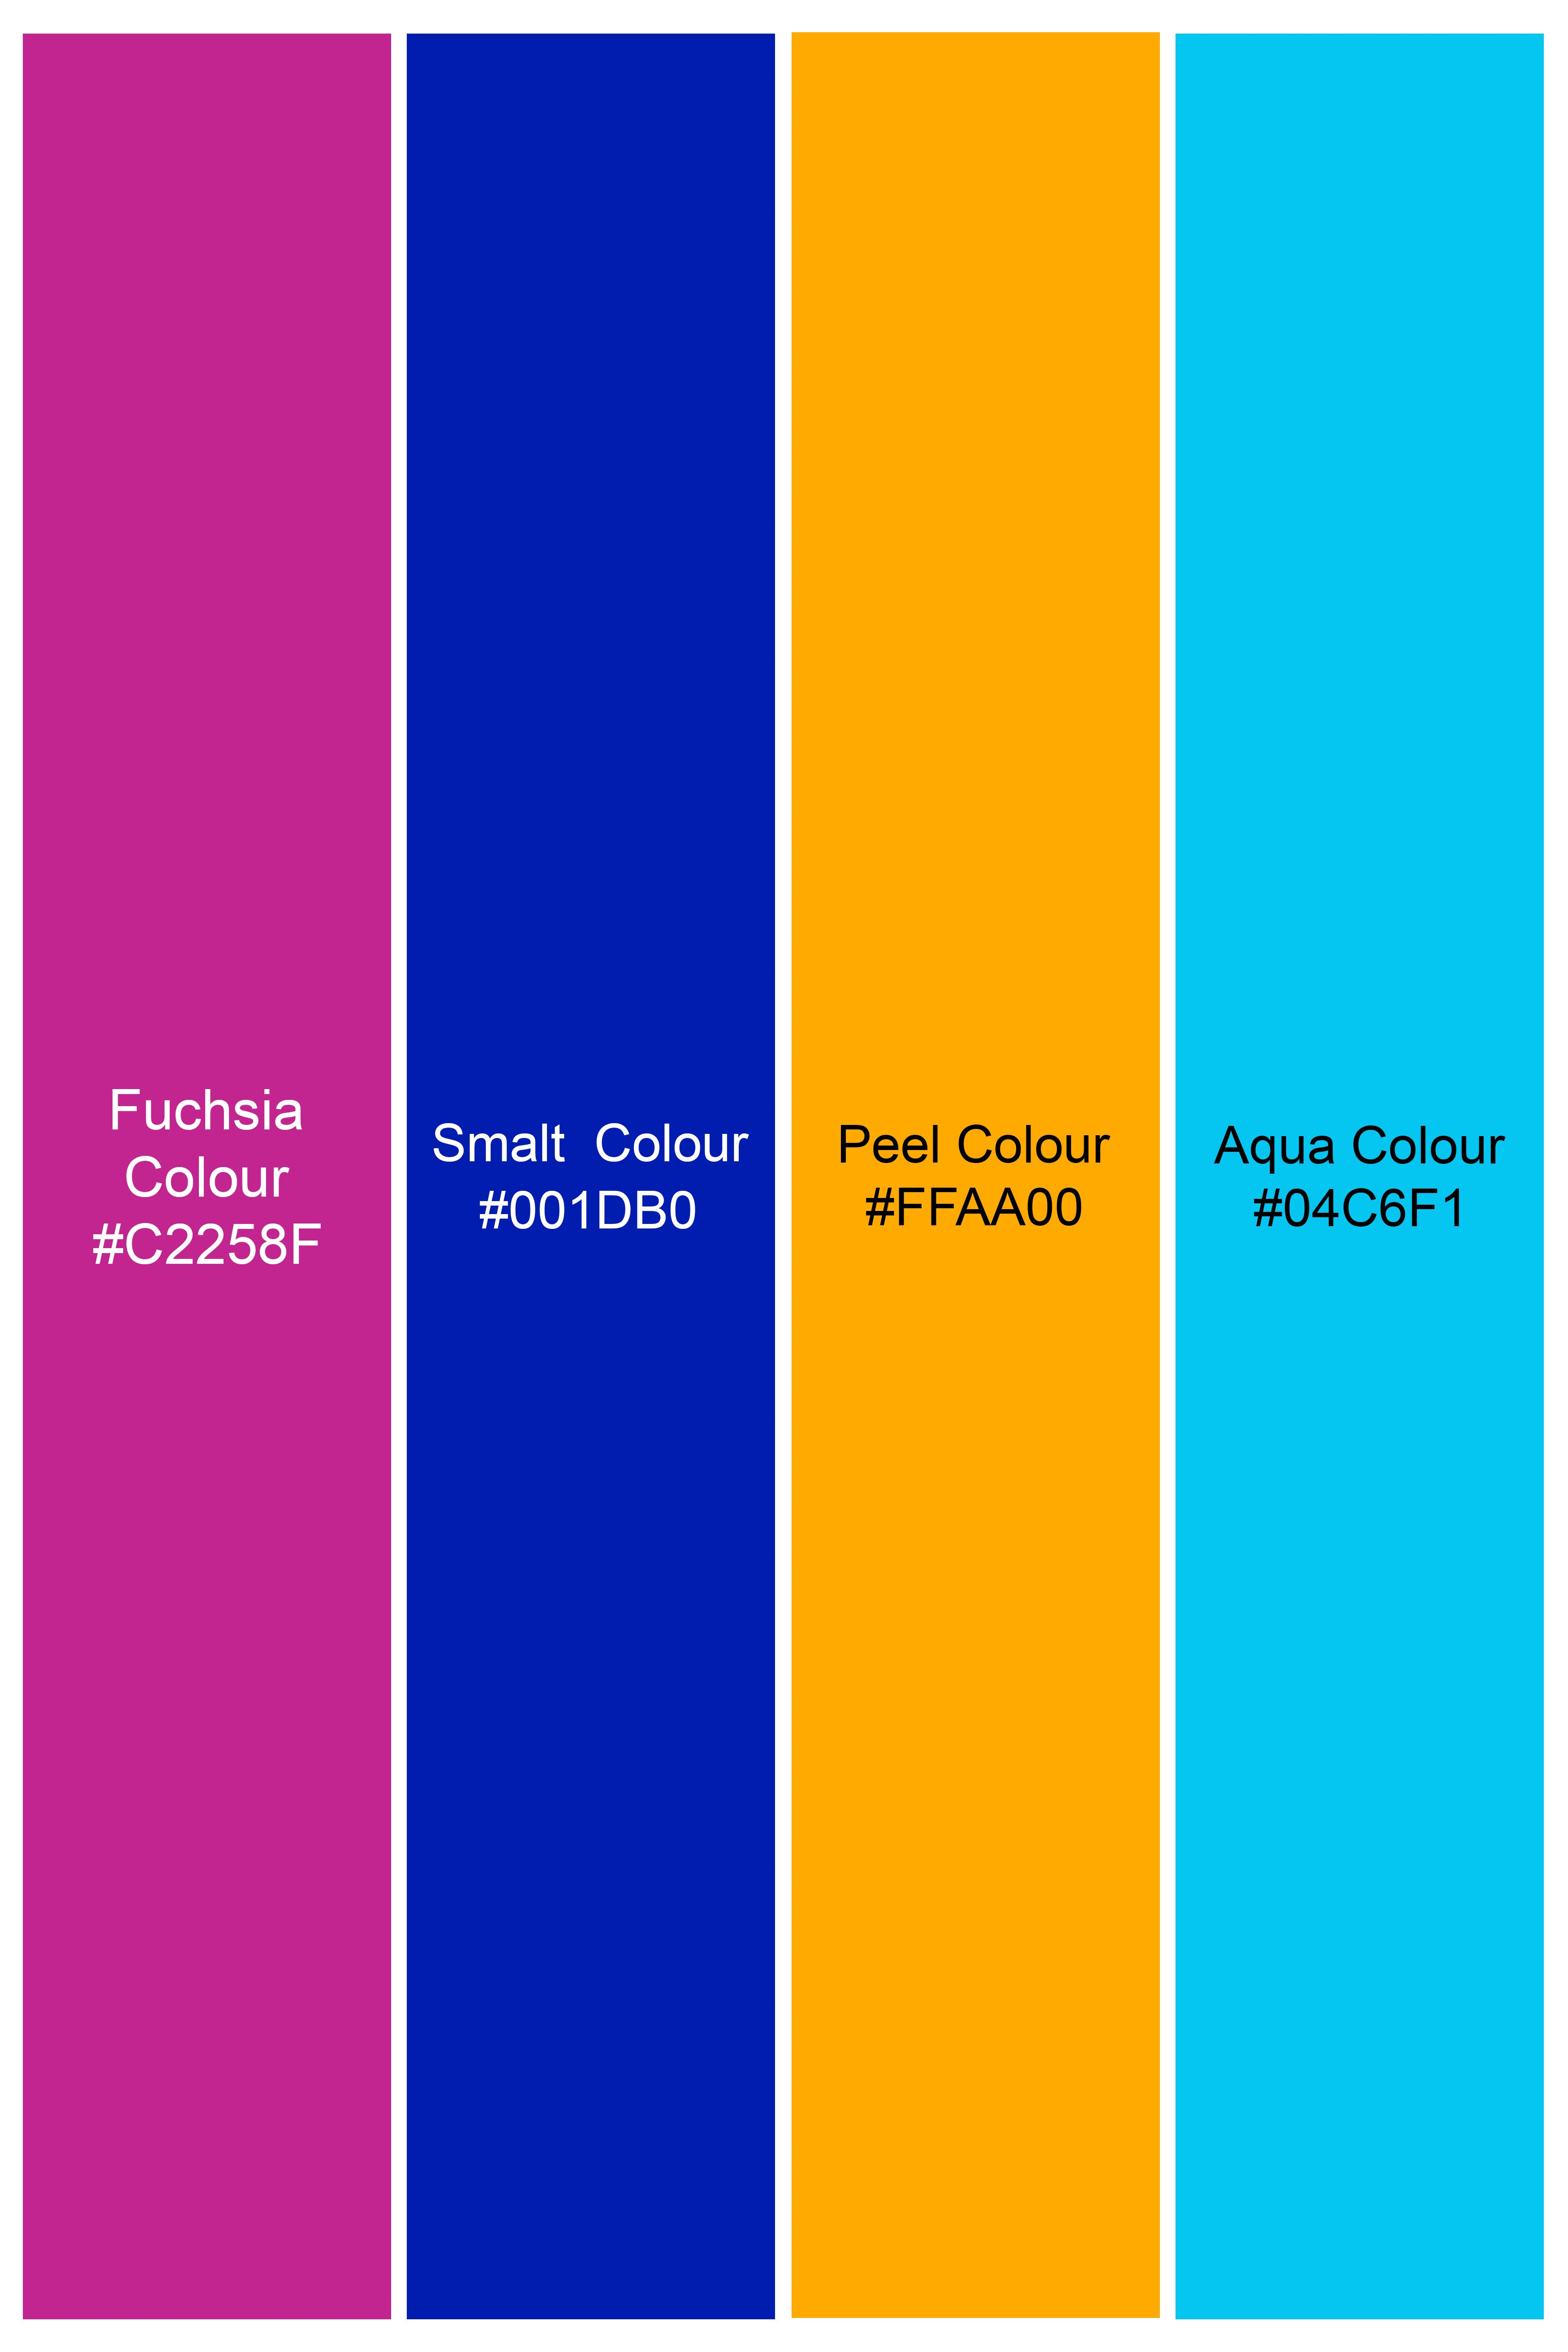 Fuchsia Pink and Smalt Blue Multicolour Cotton Thread Embroidered Bandhgala Designer Blazer BL2885-BG-FB-36, BL2885-BG-FB-38, BL2885-BG-FB-40, BL2885-BG-FB-42, BL2885-BG-FB-44, BL2885-BG-FB-46, BL2885-BG-FB-48, BL2885-BG-FB-50, BL2885-BG-FB-85-BG, BL2885-BG-FB-54, BL2885-BG-FB-56, BL2885-BG-FB-58, BL2885-BG-FB-60